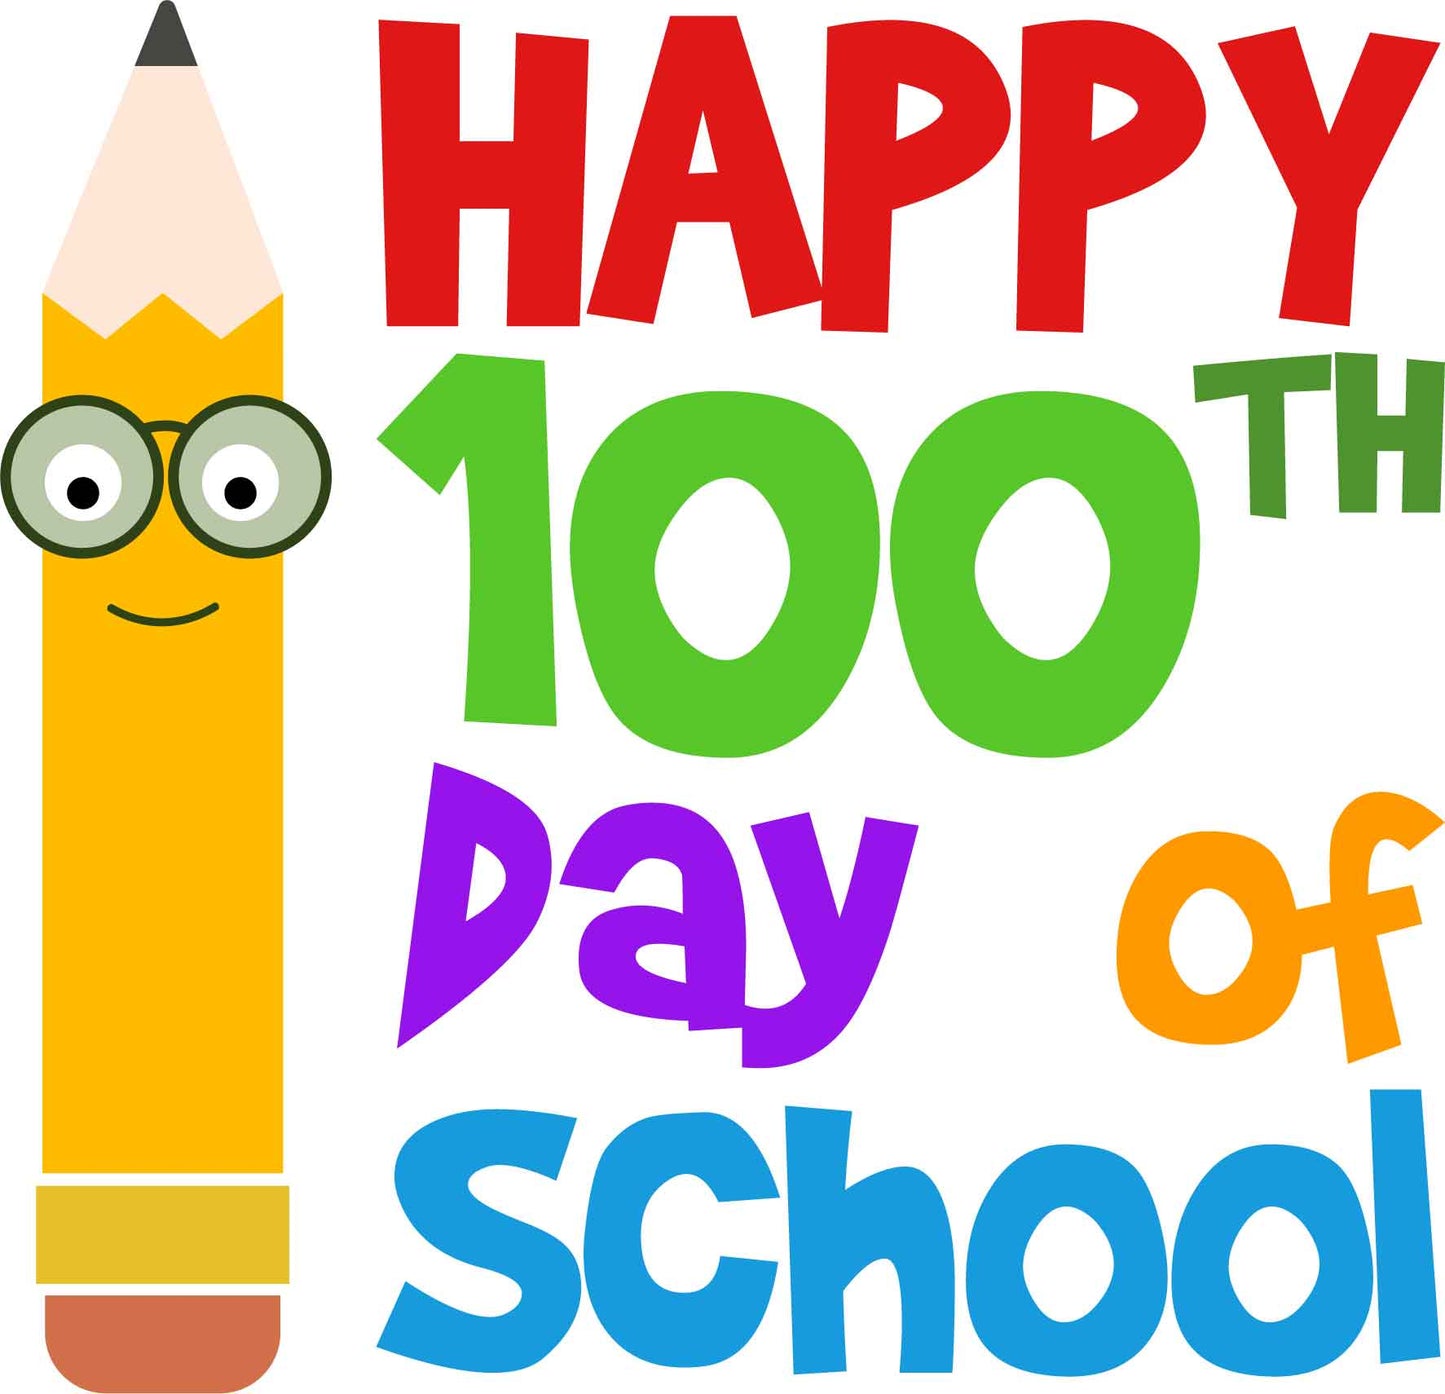 Happy 100th Day of School Design Transfer